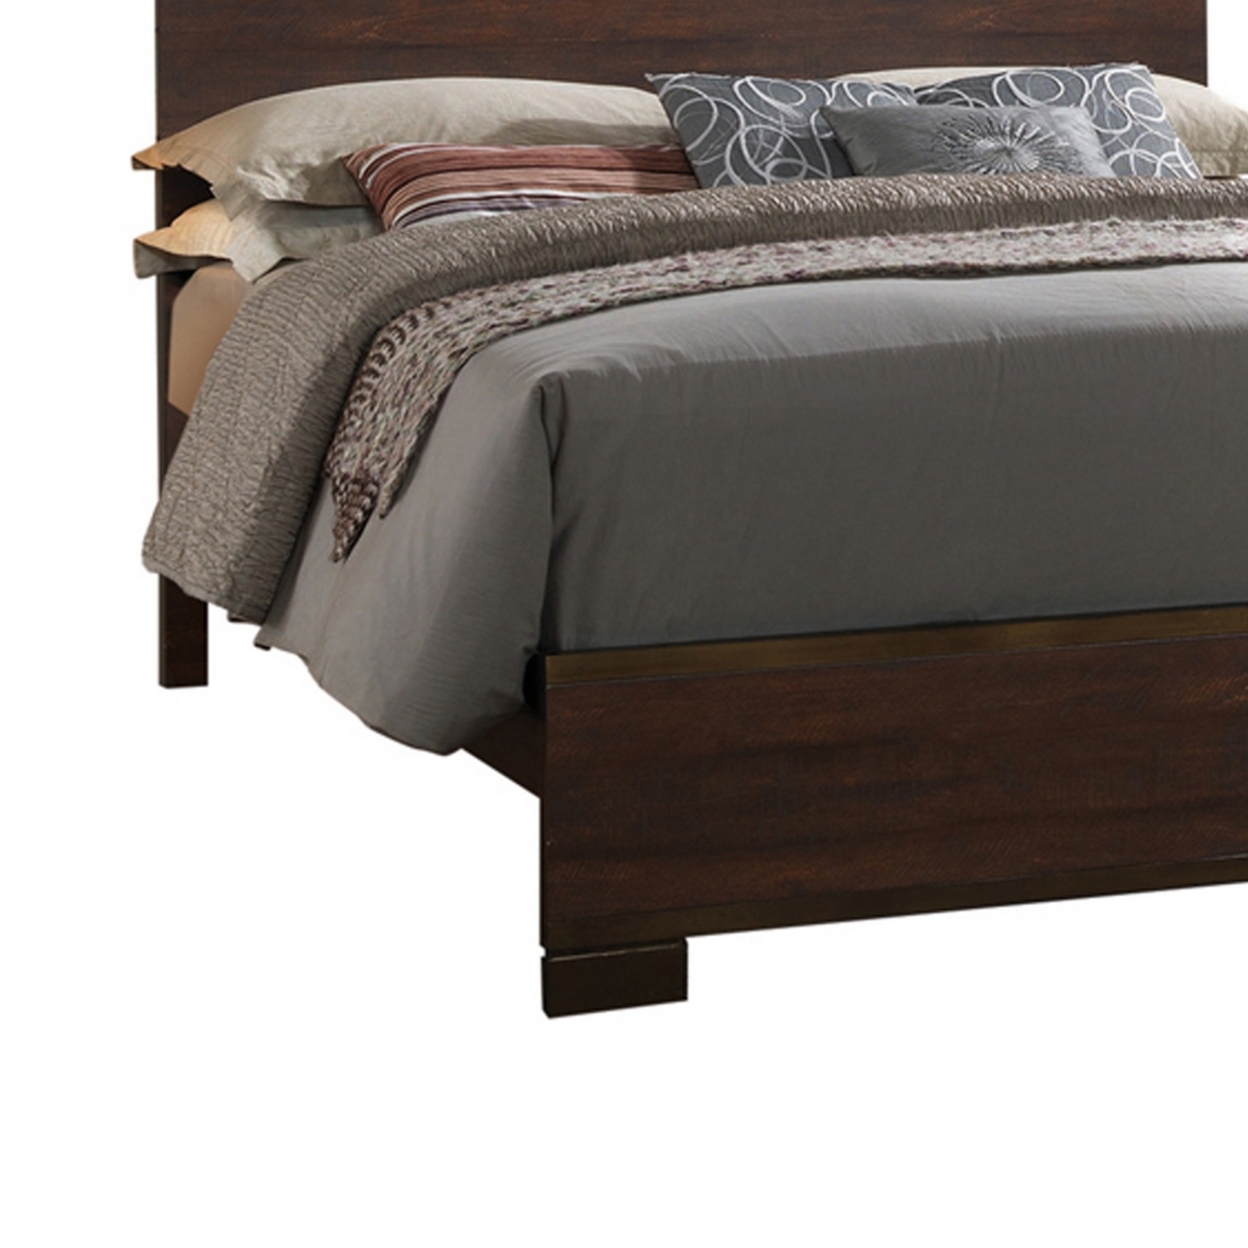 Transitional Queen Size Wooden Bed With Natural Grain Details, Dark Brown- Saltoro Sherpi